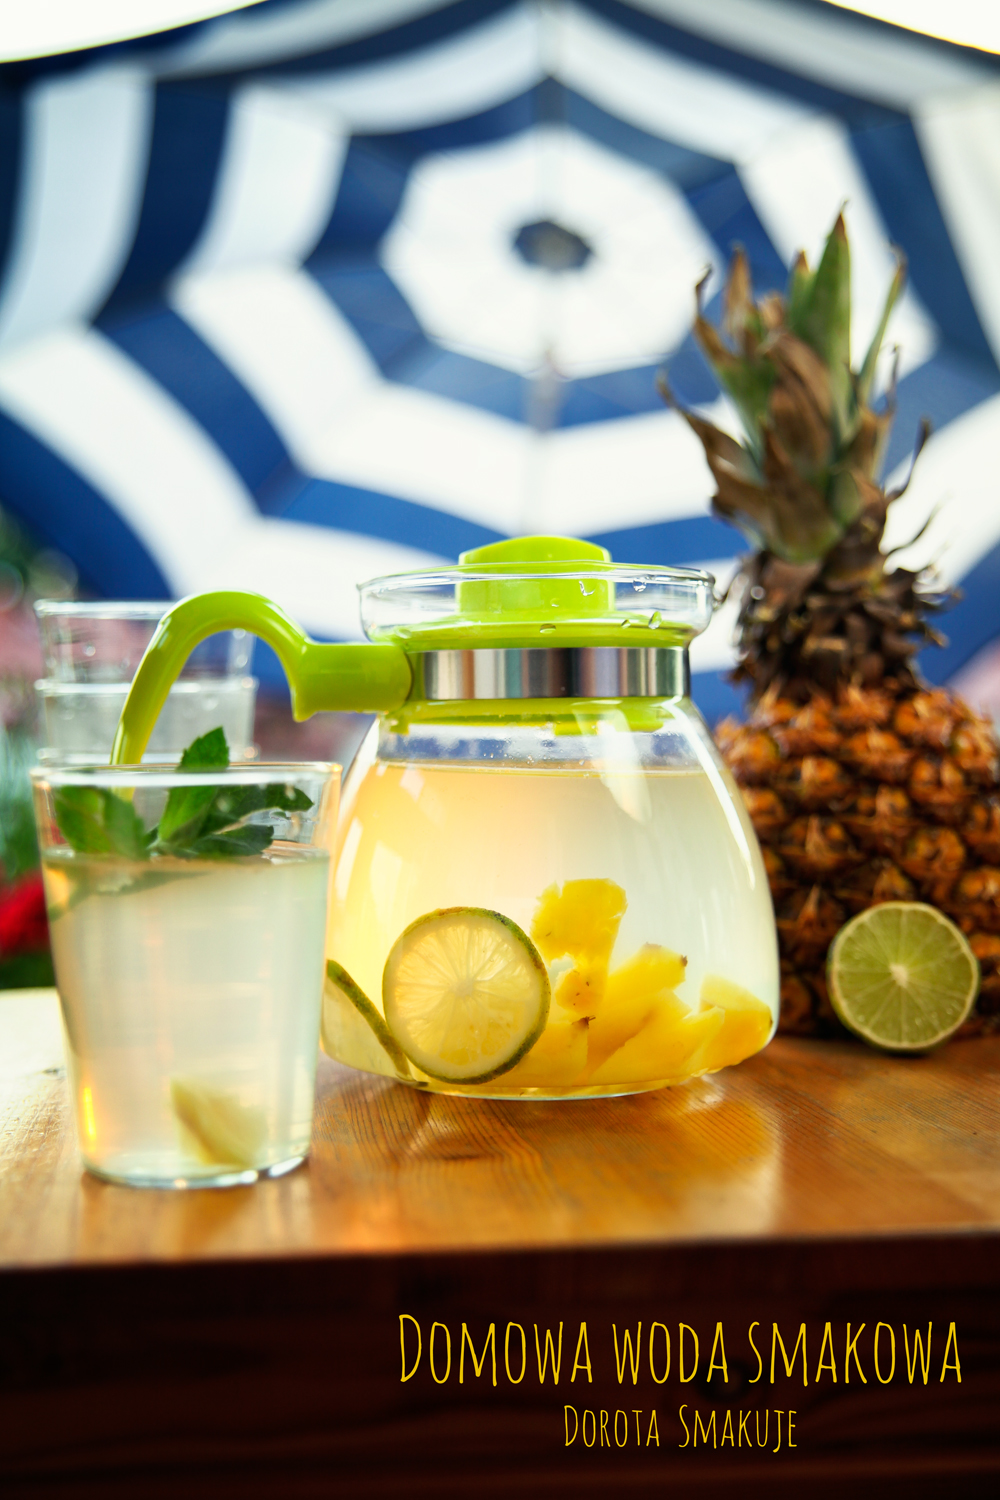 Domowa woda smakowa ananasowo-limonkowa